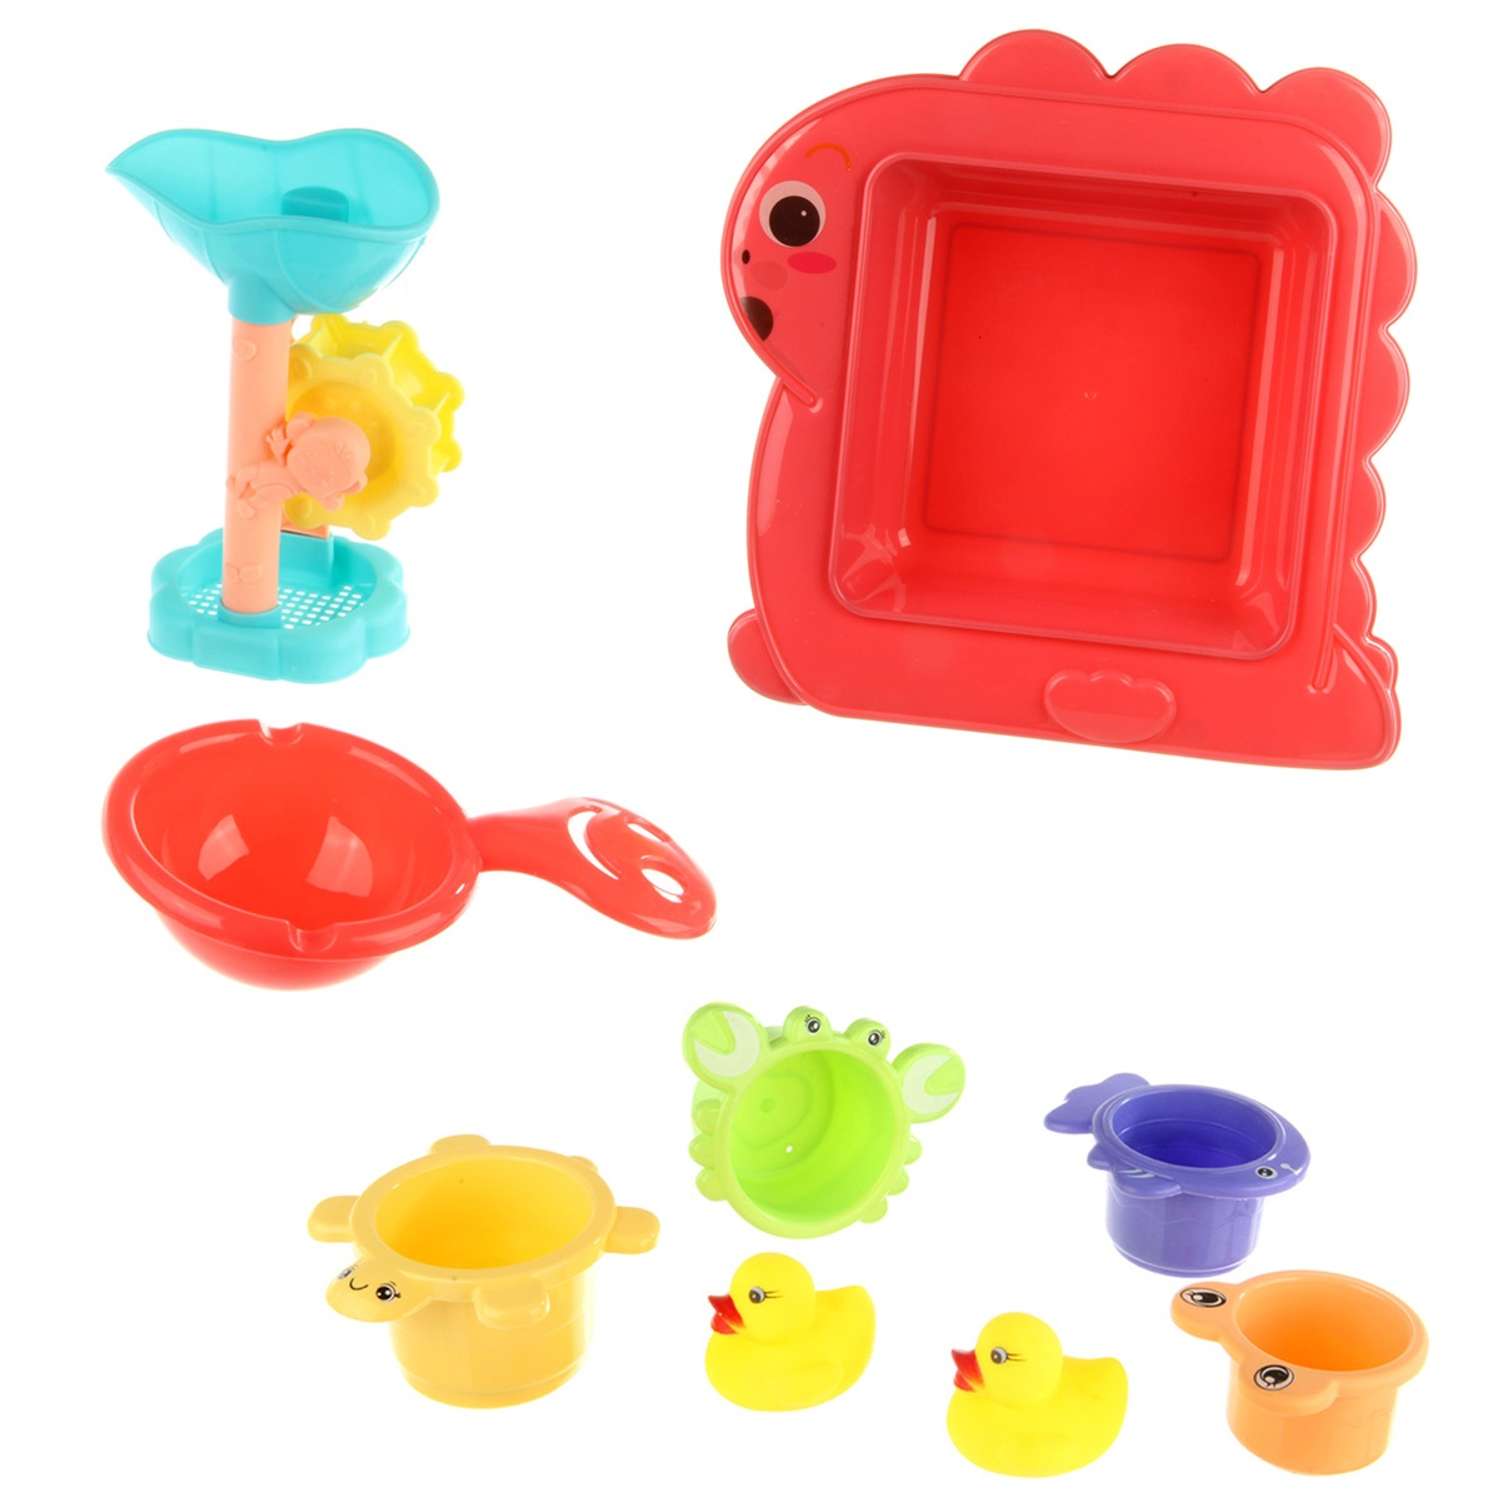 Игрушки для купания Ути Пути мельница и 7 предметов на подносе - фото 1